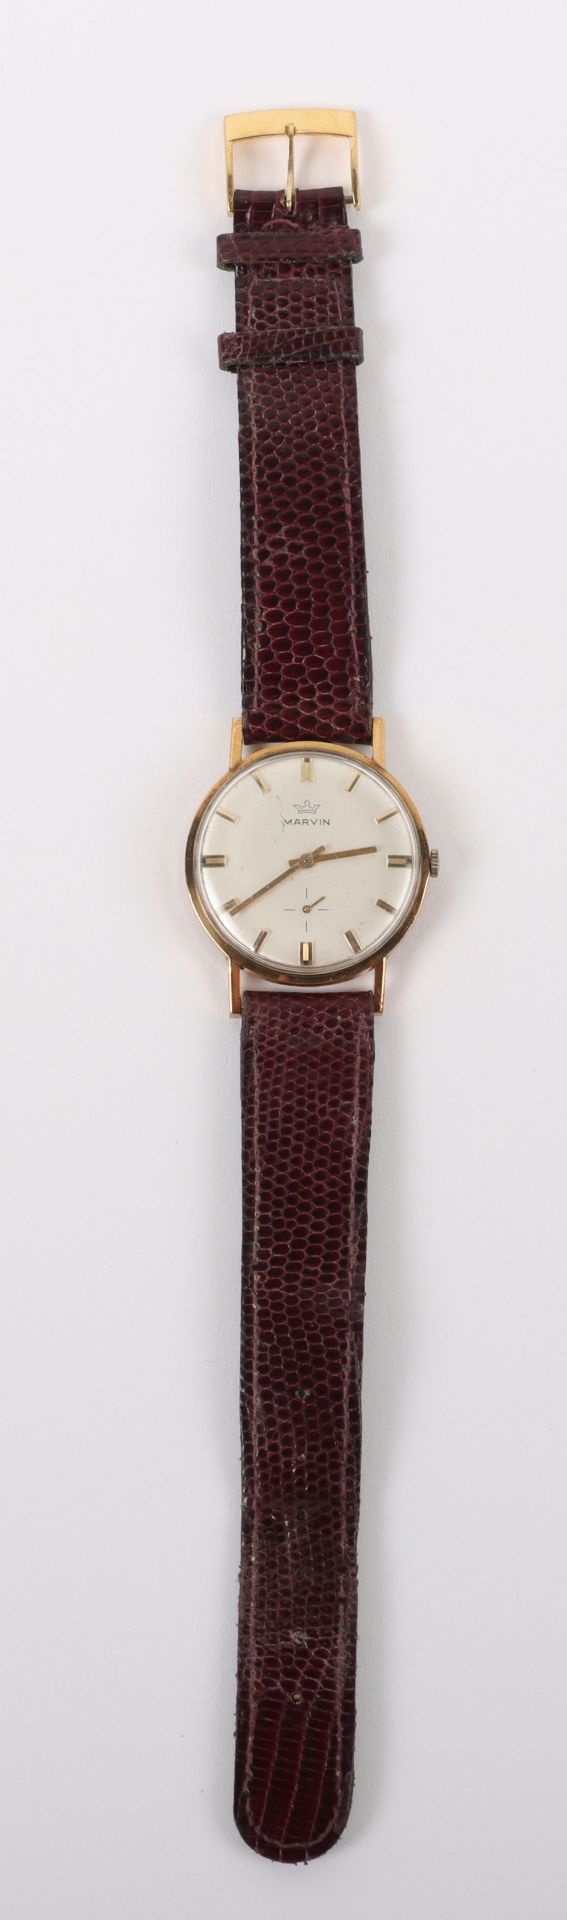 A vintage 9ct gold Marvin wristwatch, circa 1950